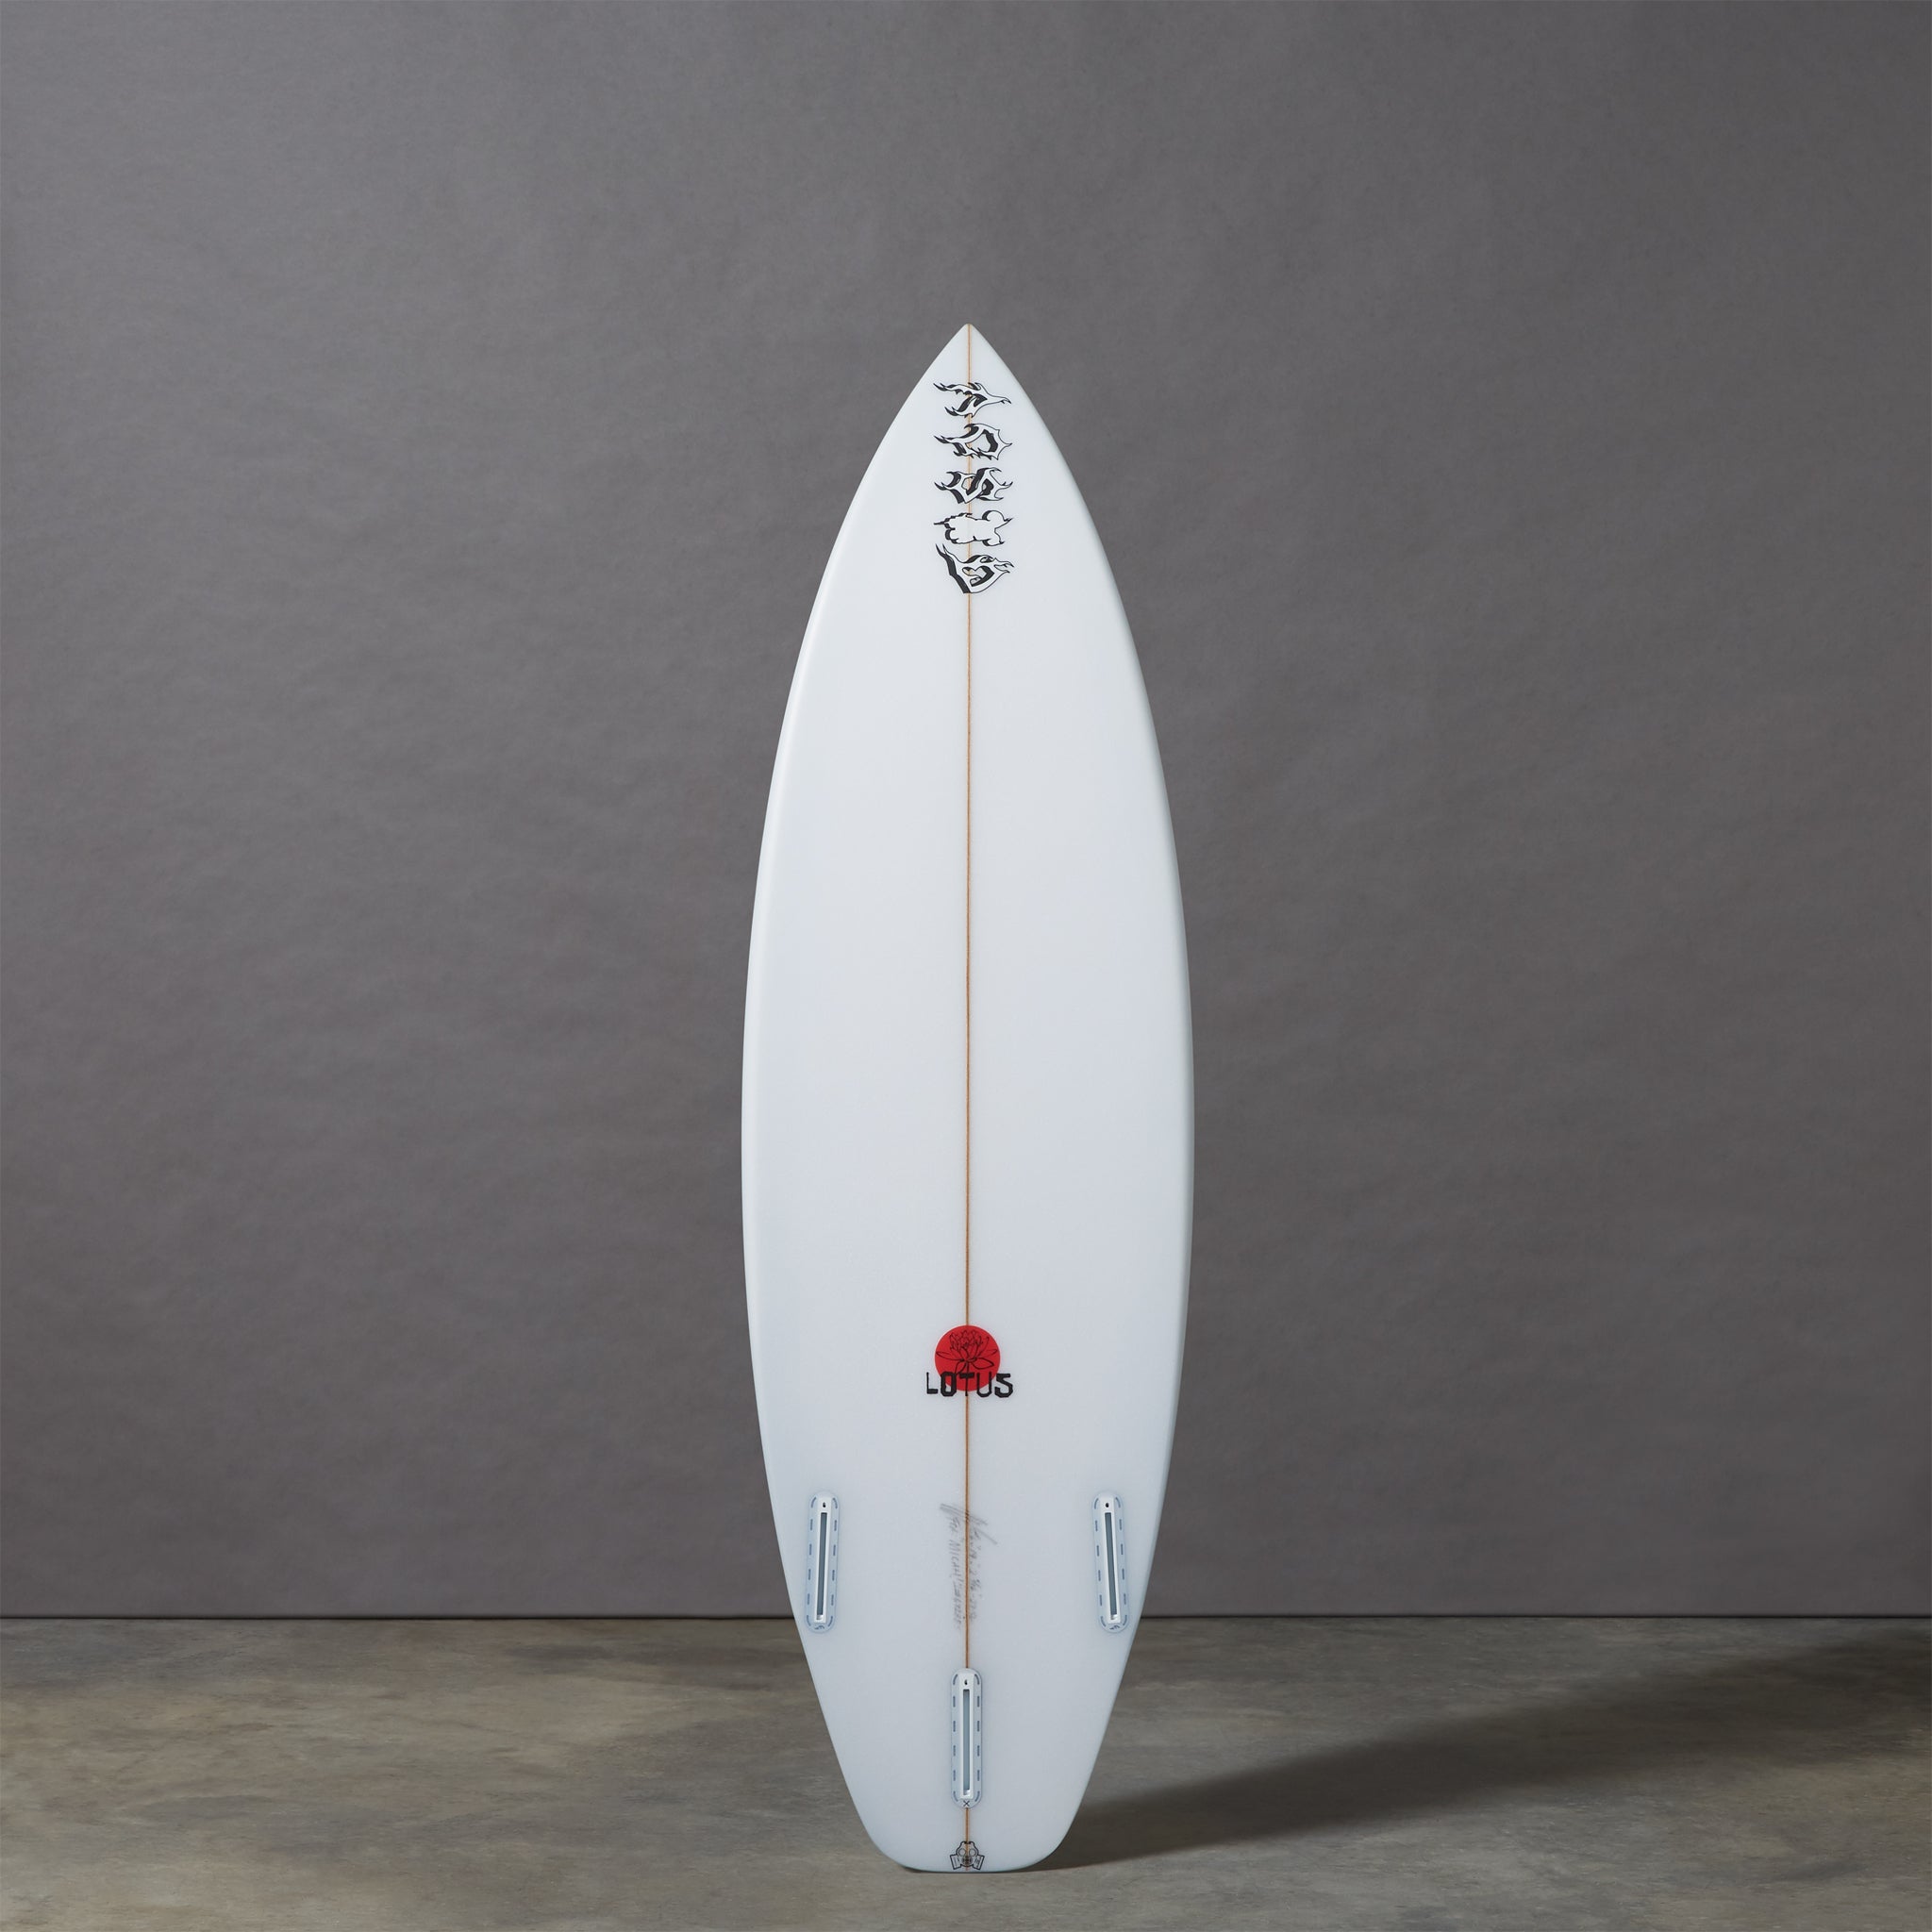 LOTUS – ACSOD Surfboards